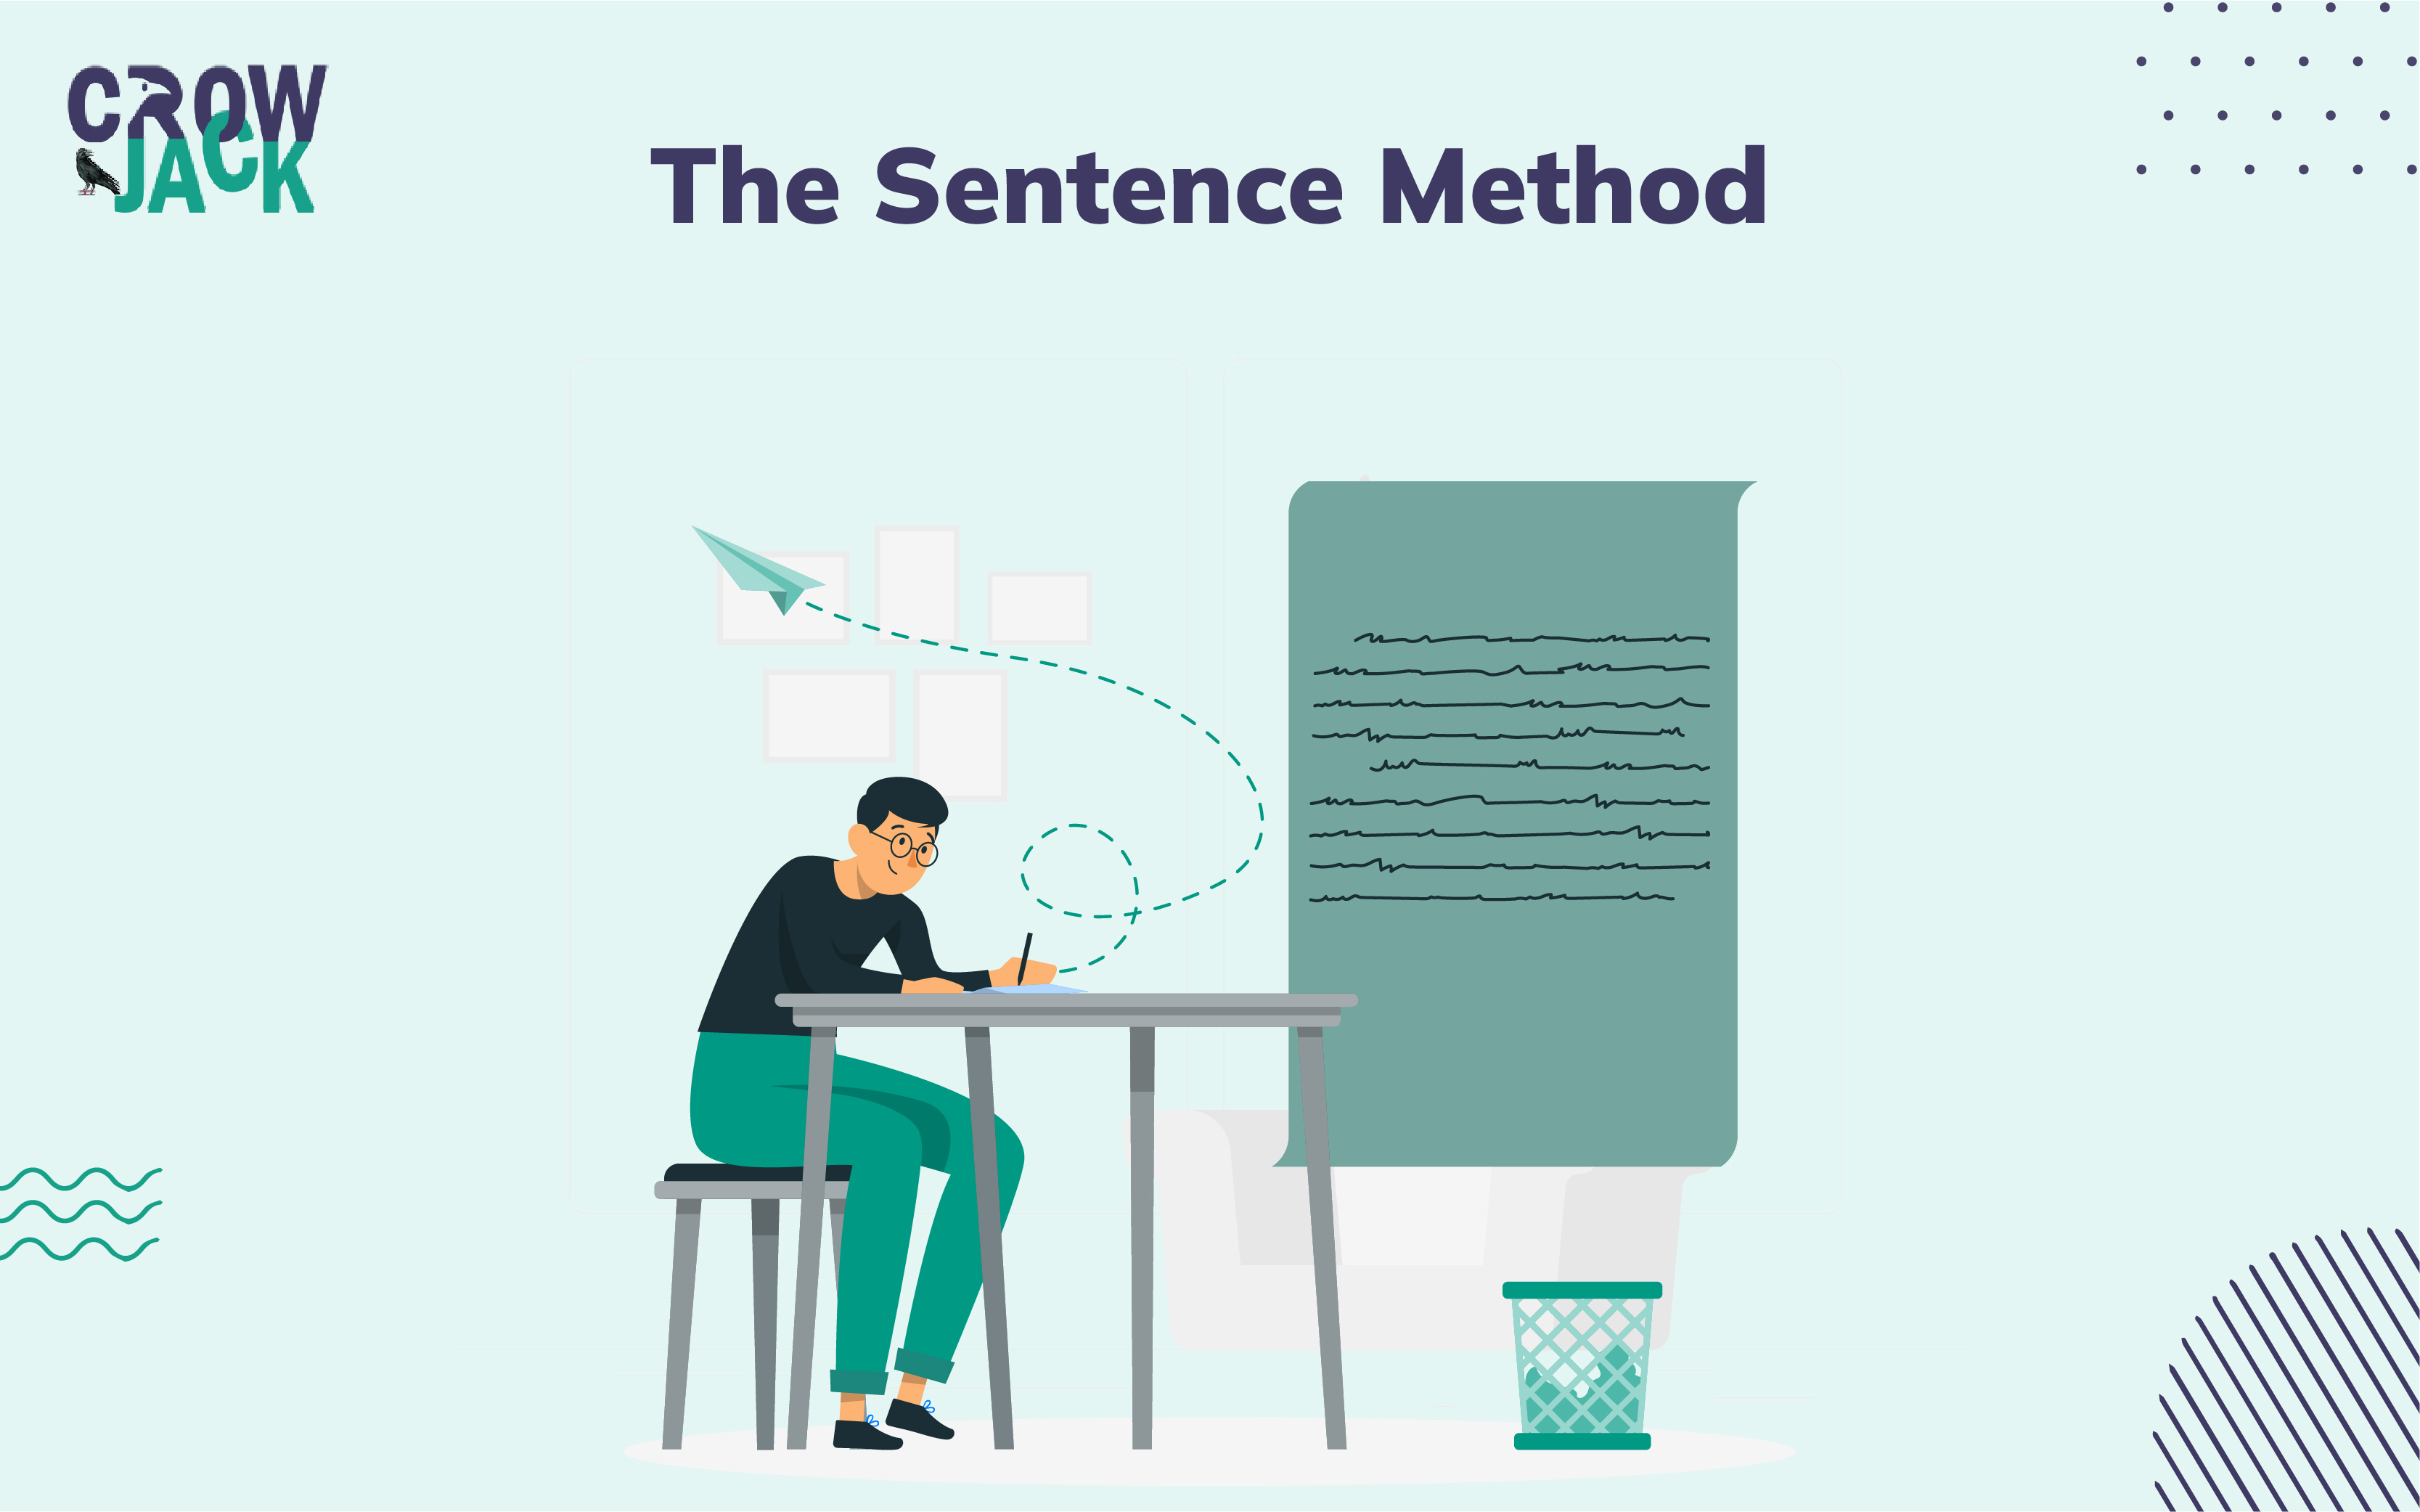 The Sentence Method